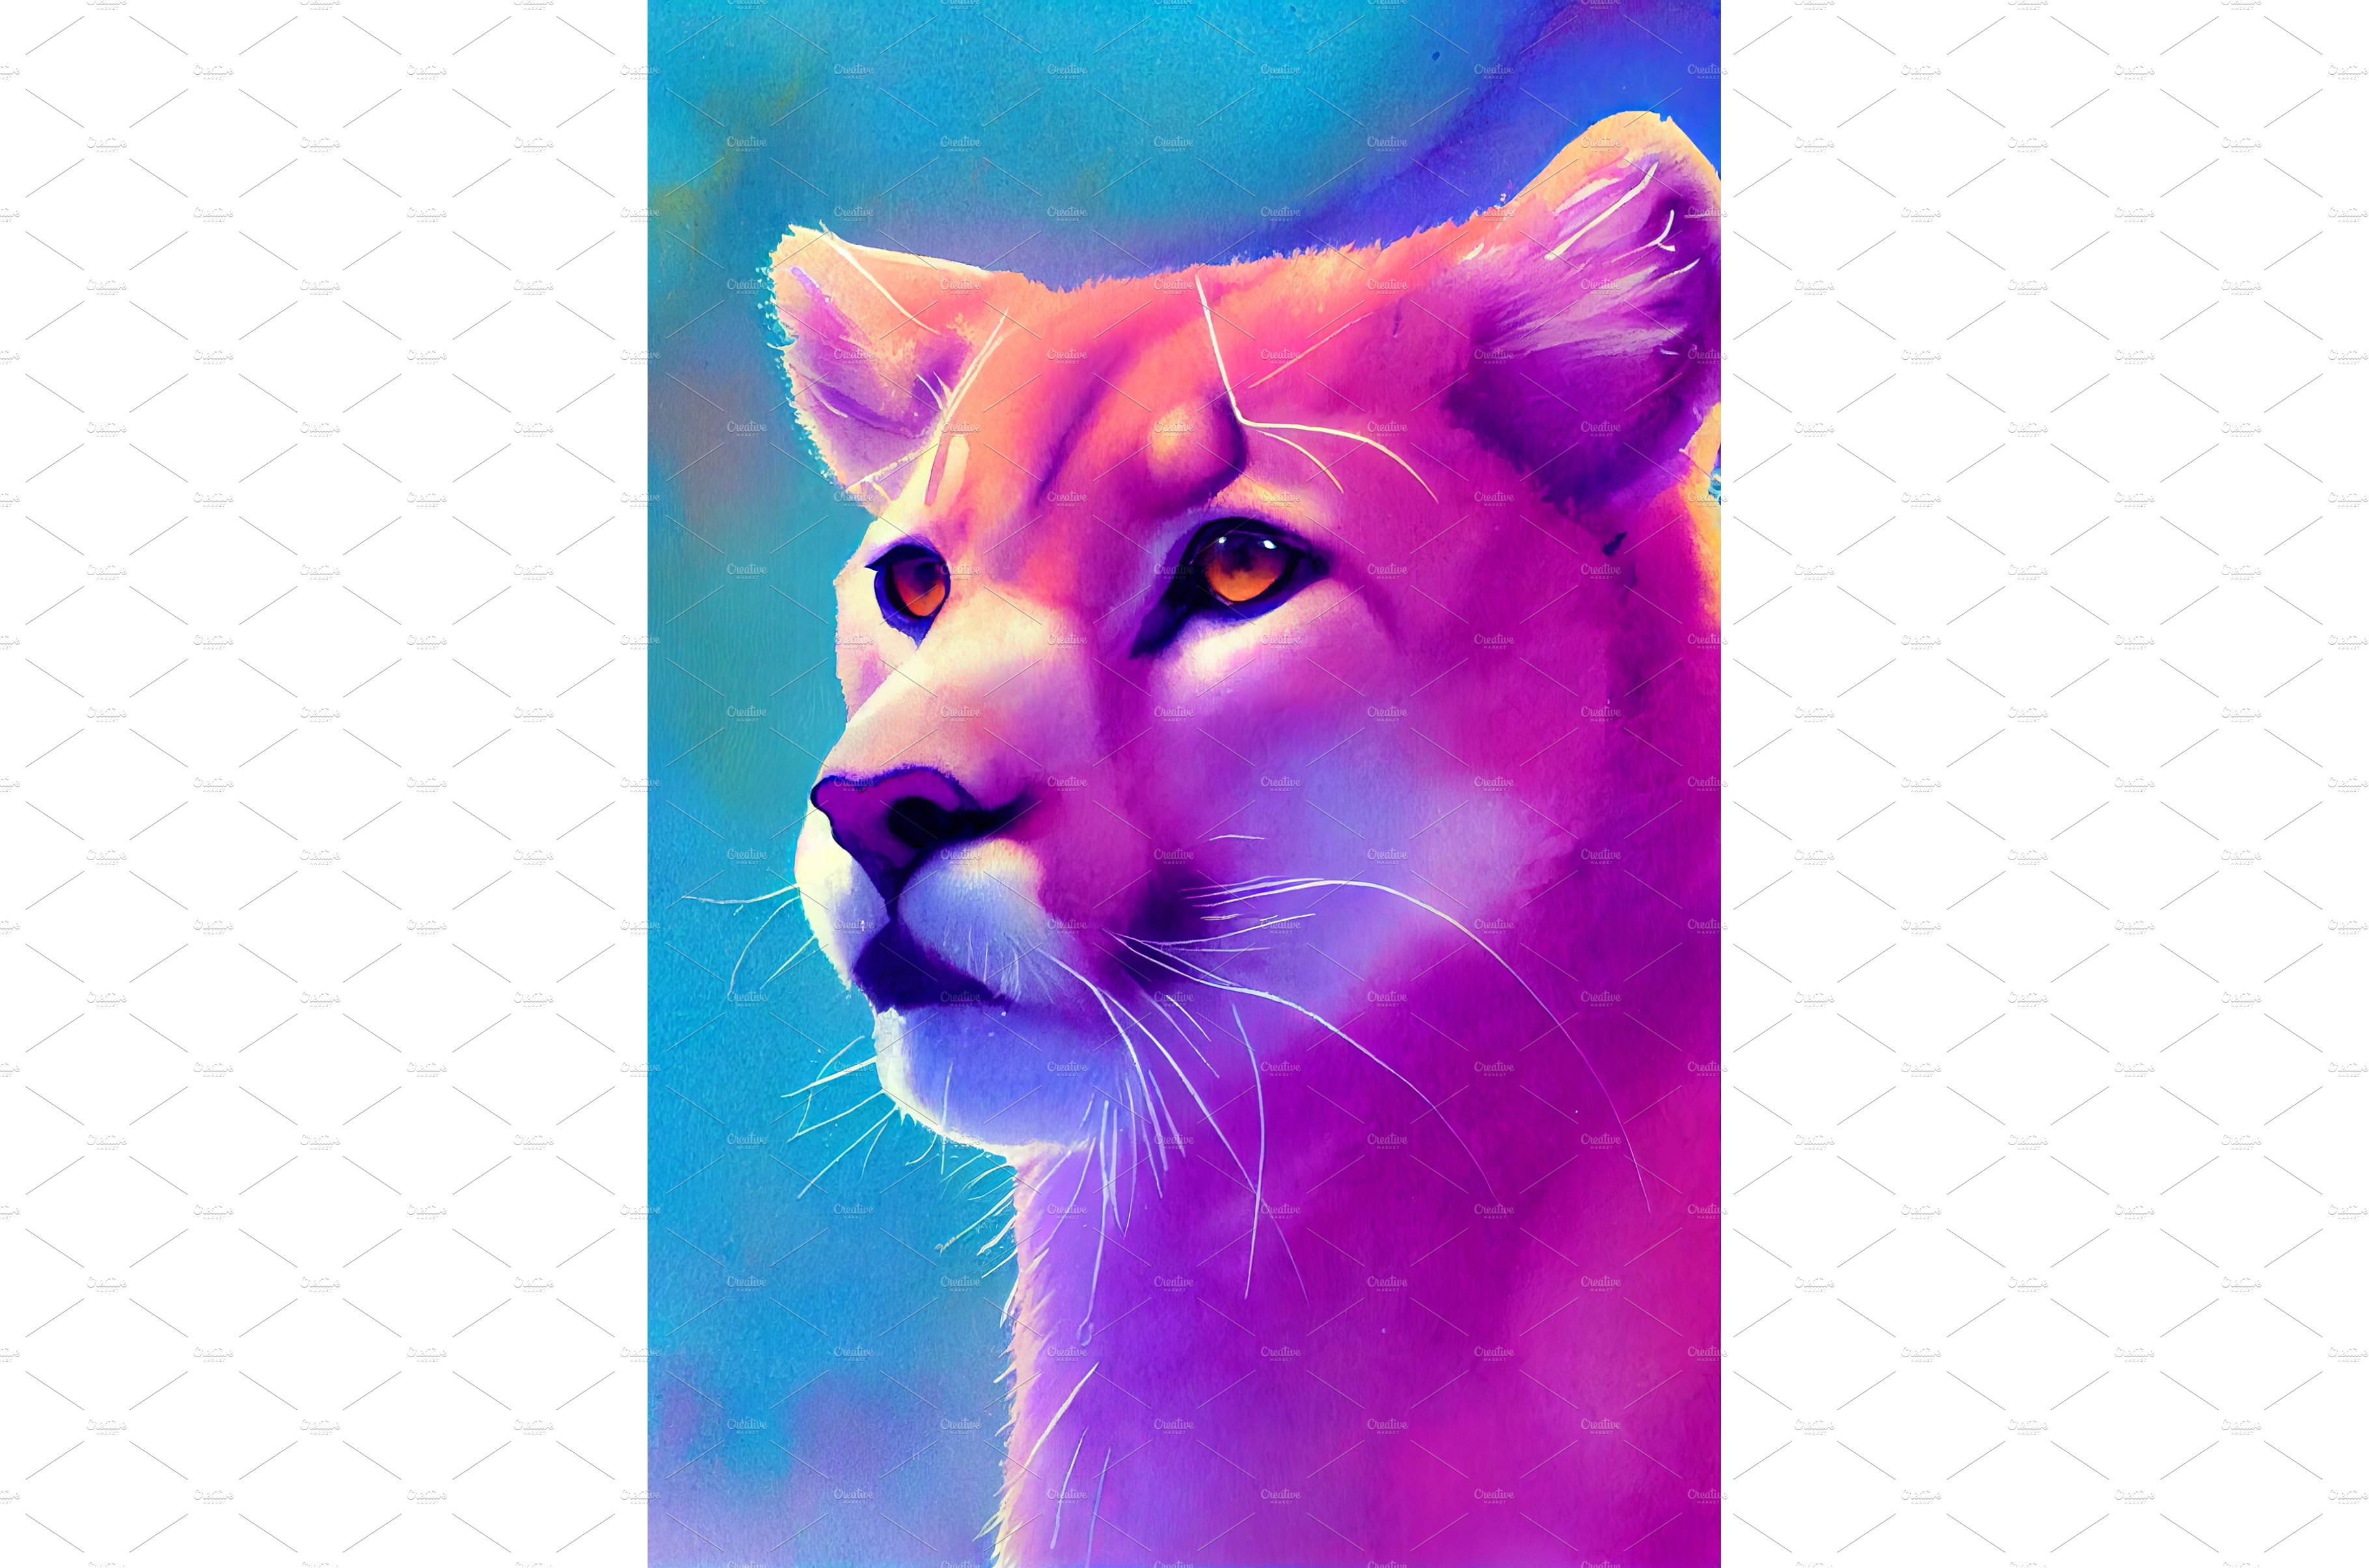 Watercolor portrait of cute cougar cover image.